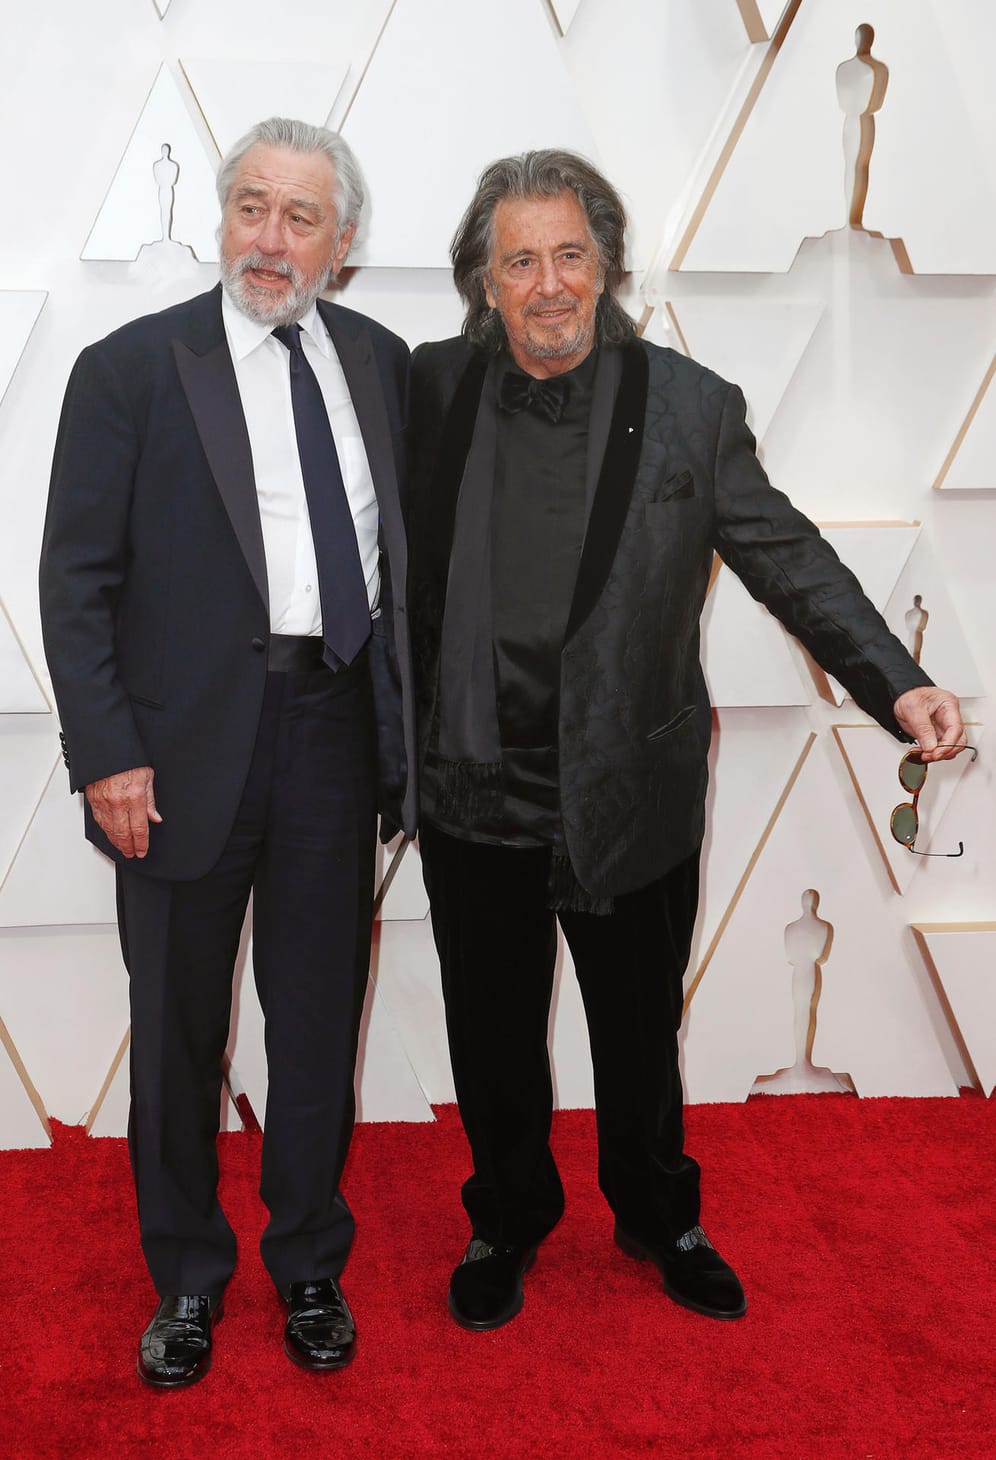 Robert De Niro und Al Pacino